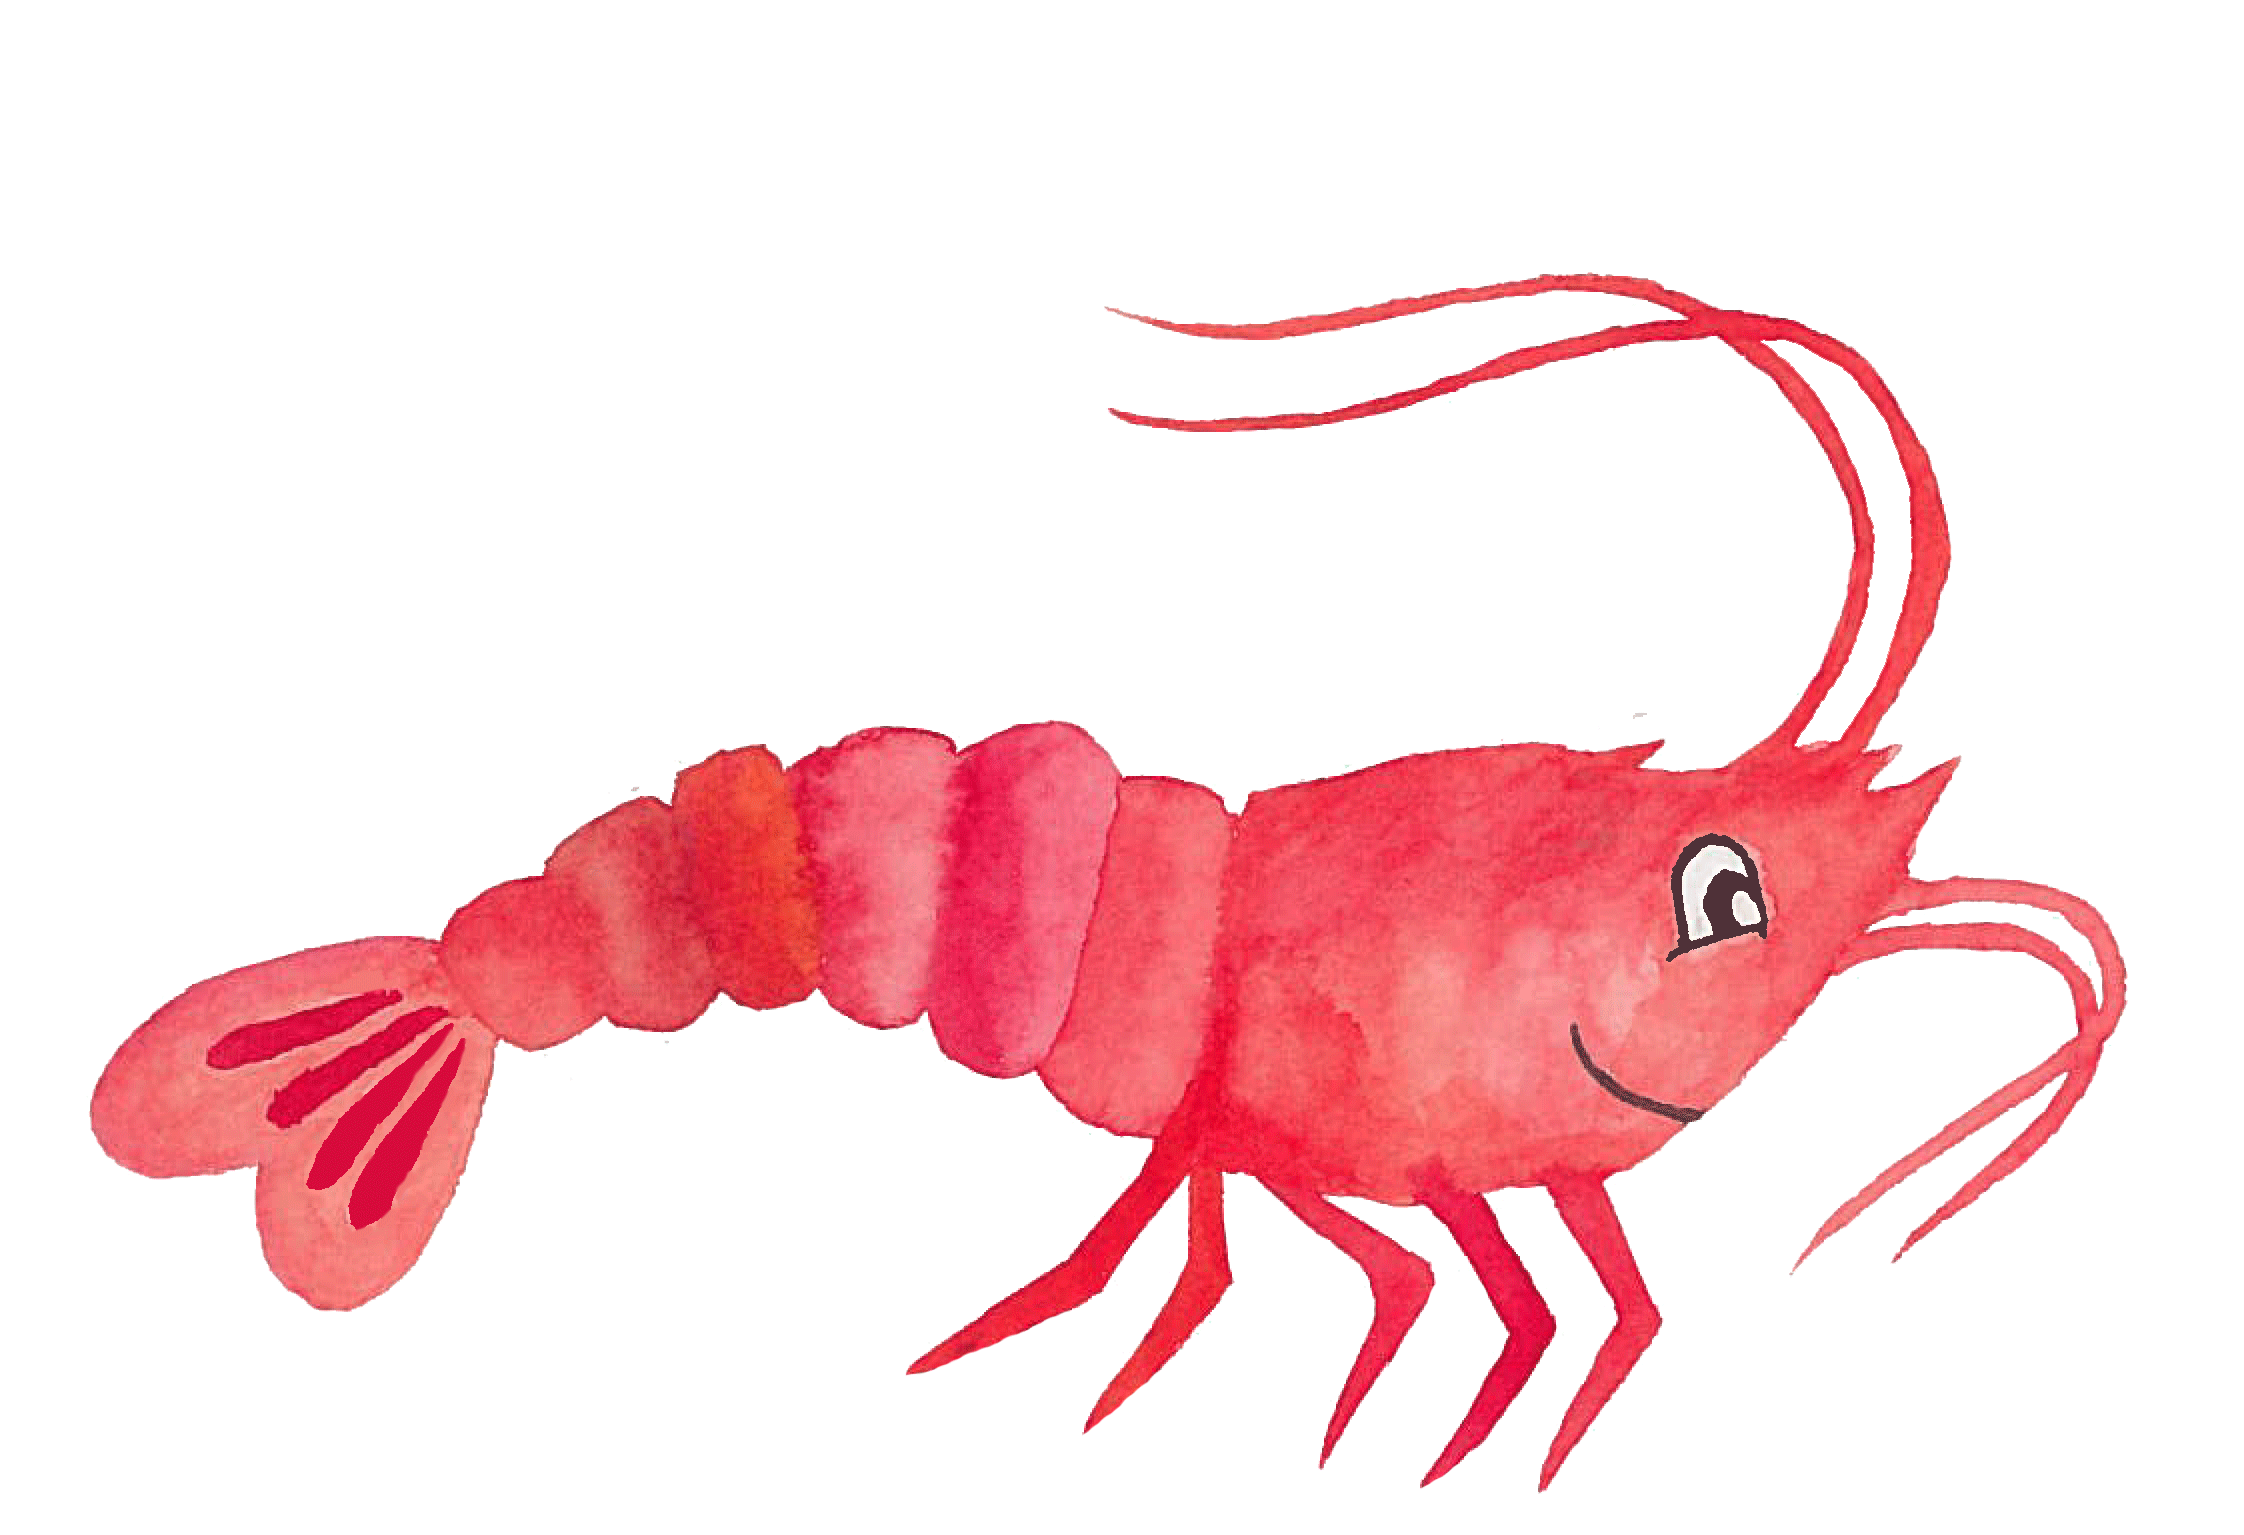 Stanley-the-shrimp